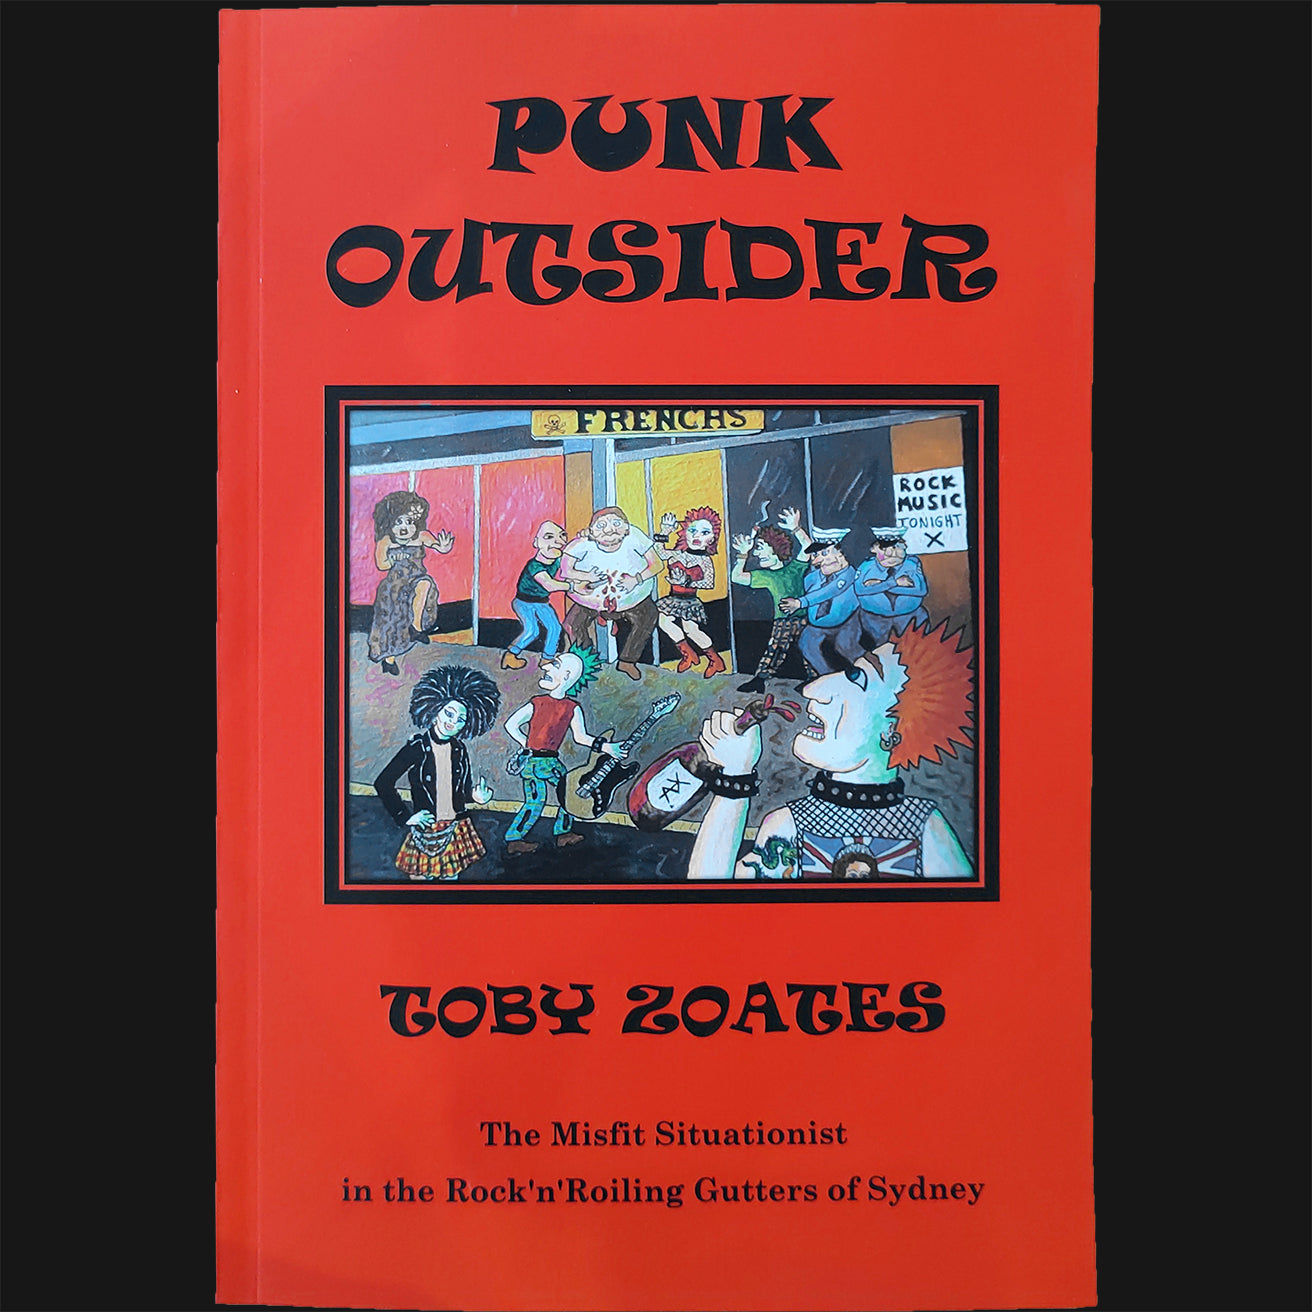 TOBY ZOATES - "PUNK OUTSIDER" BOOK